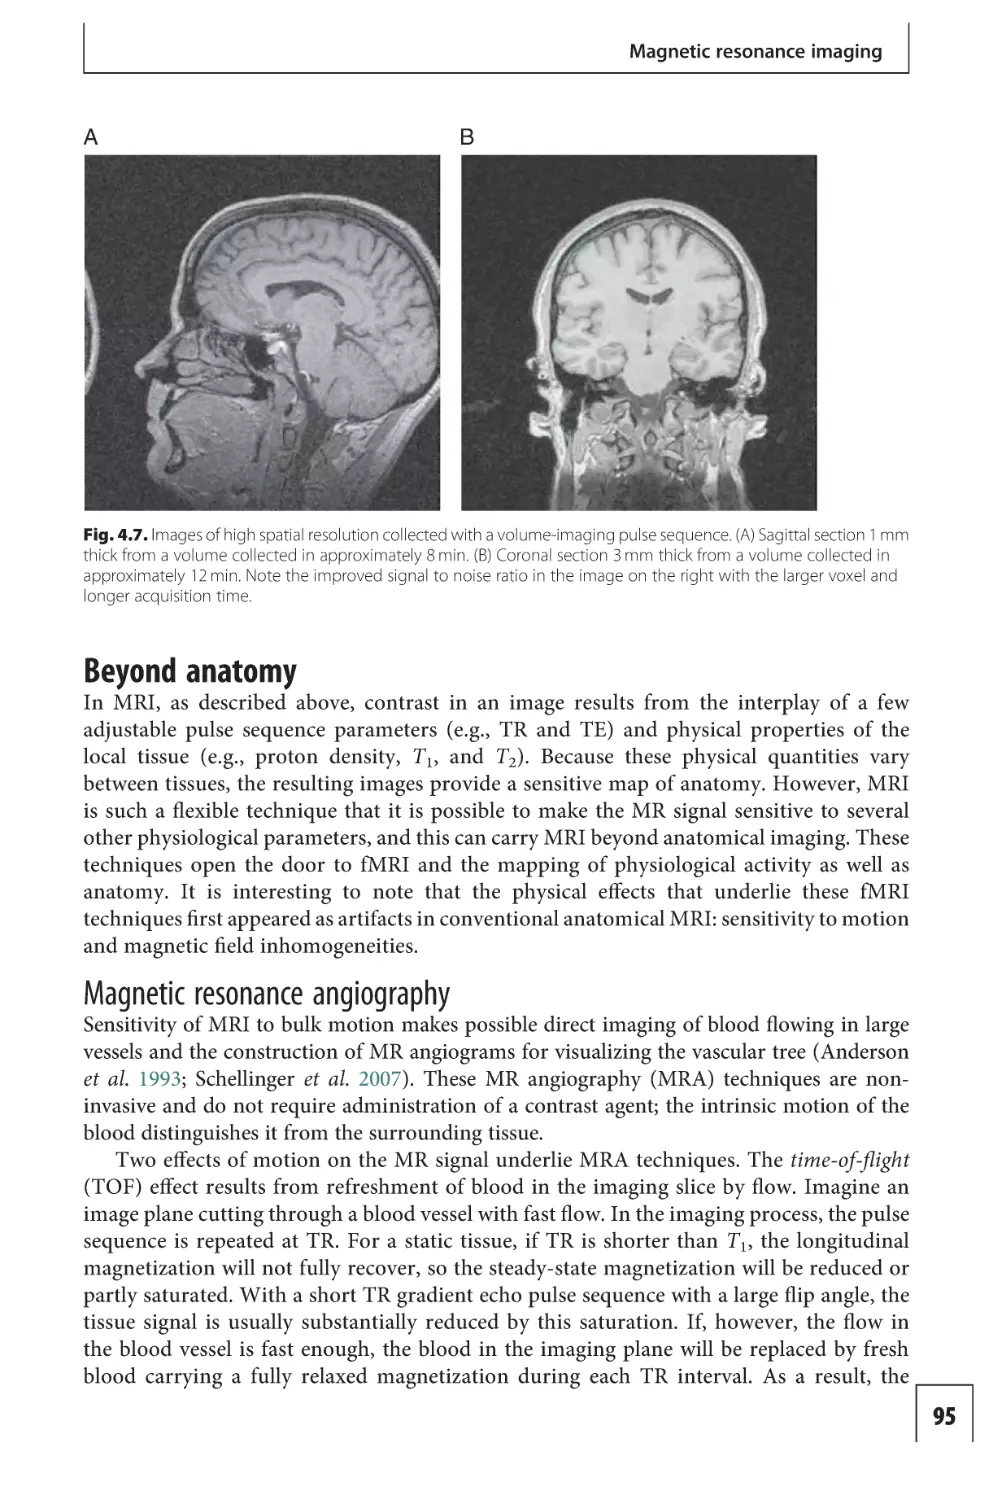 Beyond anatomy
Magnetic resonance angiography